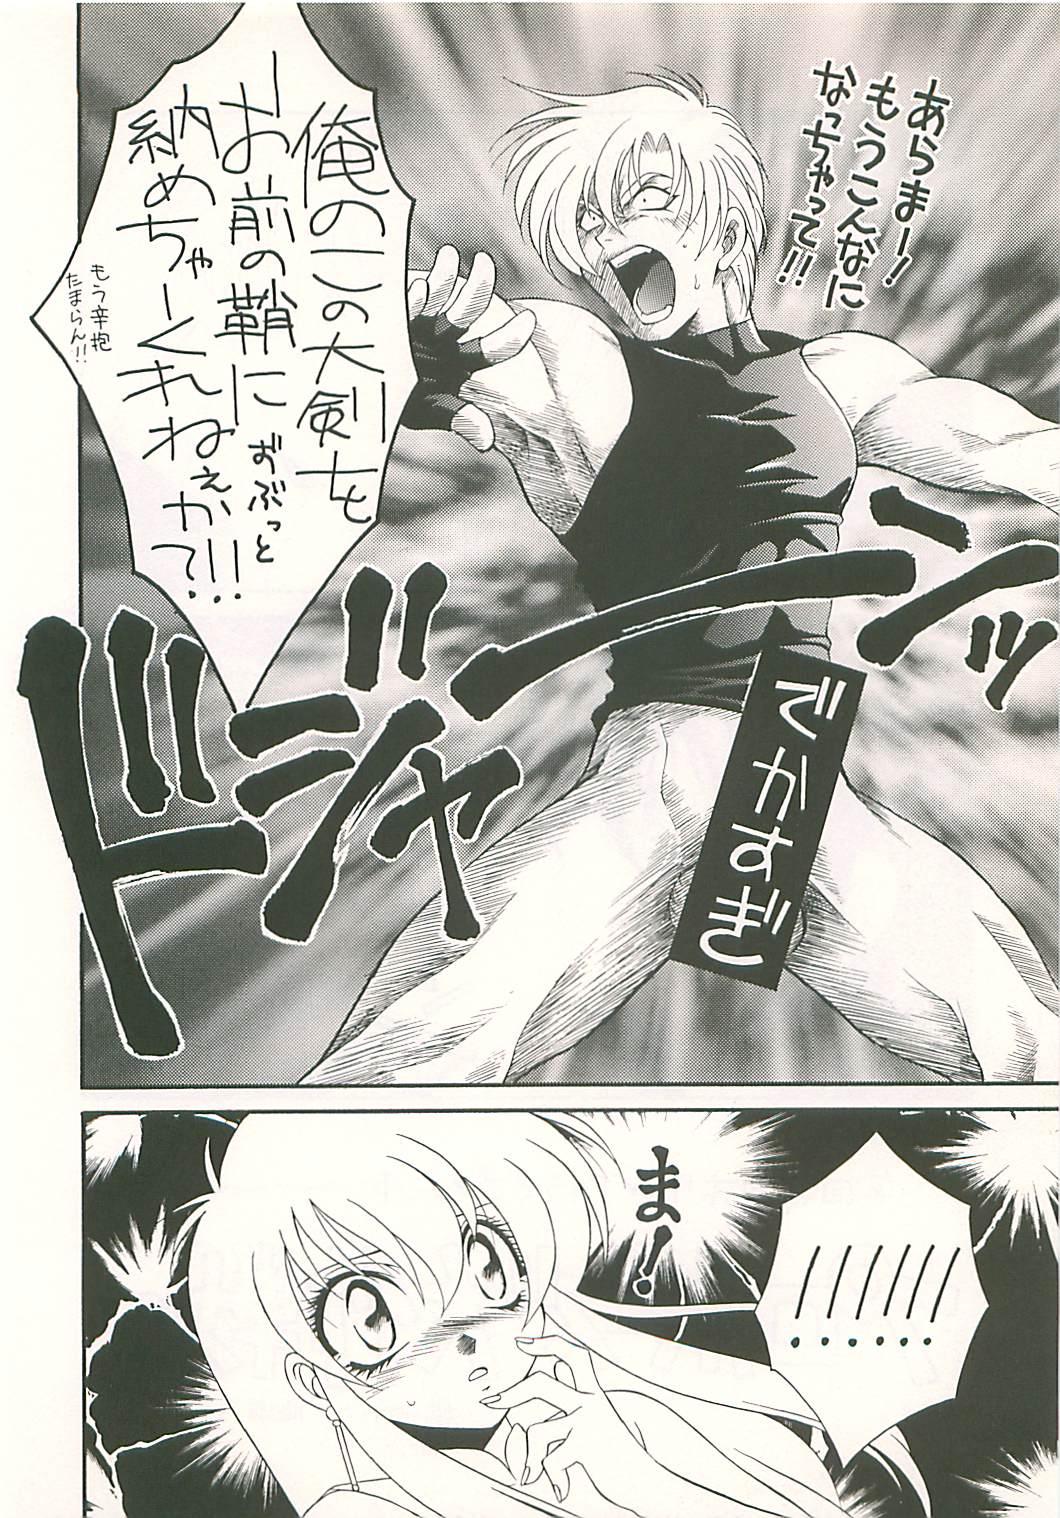 Shaking Seisen no keifu 4 - Fire emblem seisen no keifu Orgy - Page 6